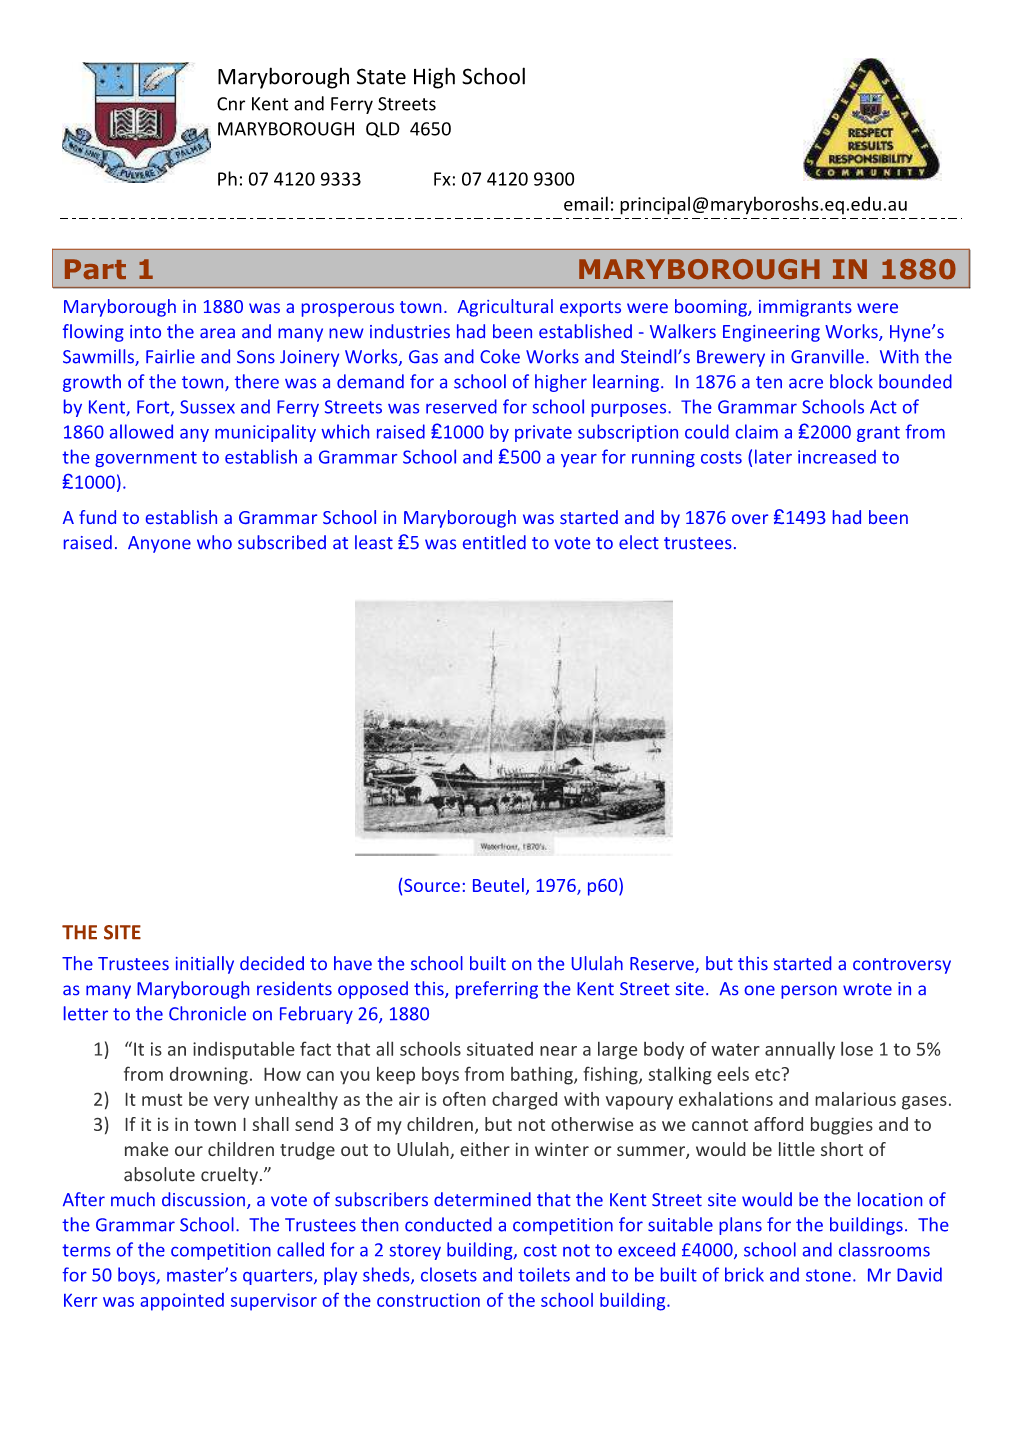 Complete History of Maryborough